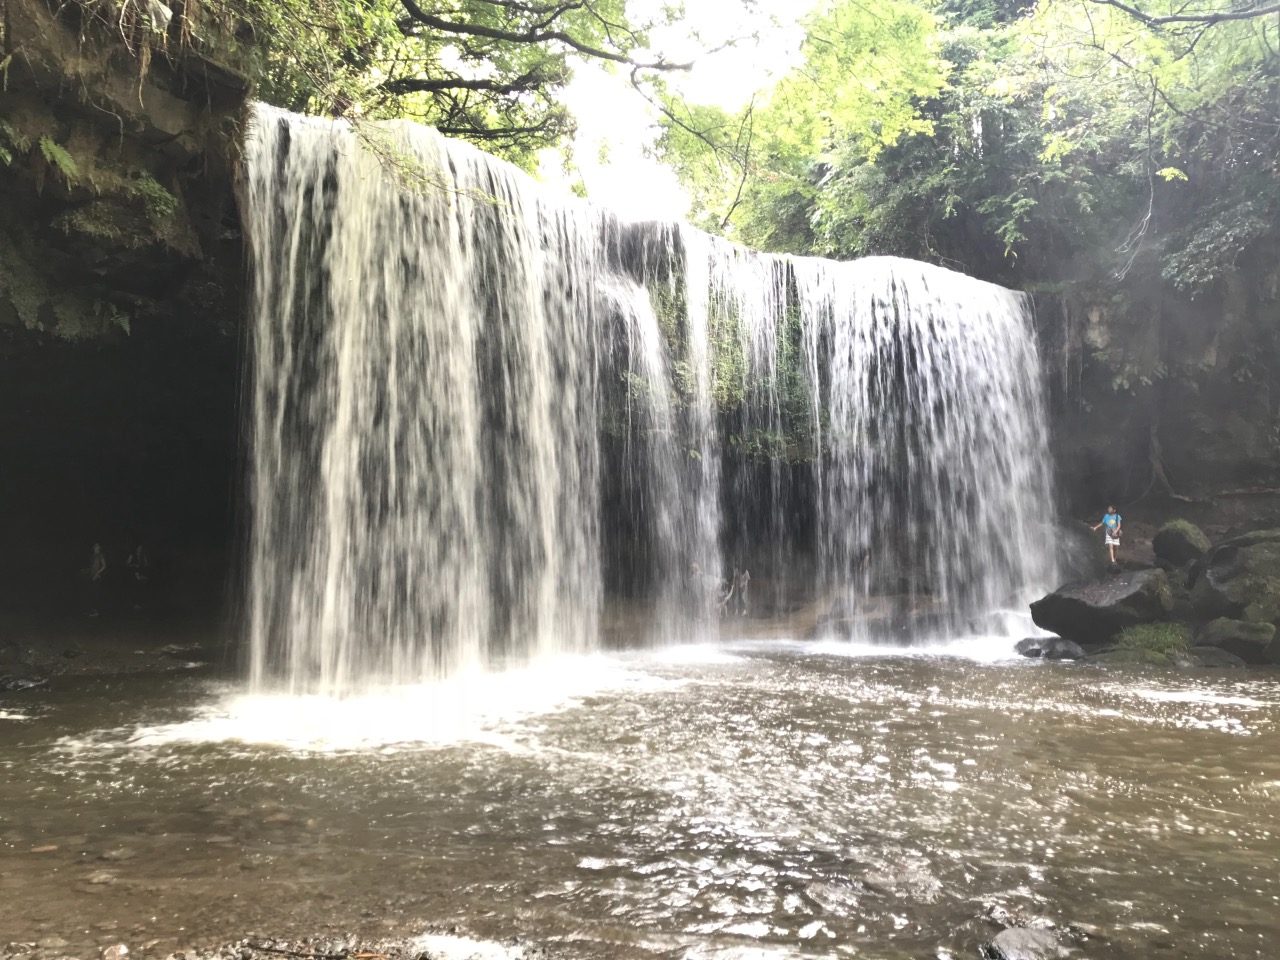 Very beautiful waterfall